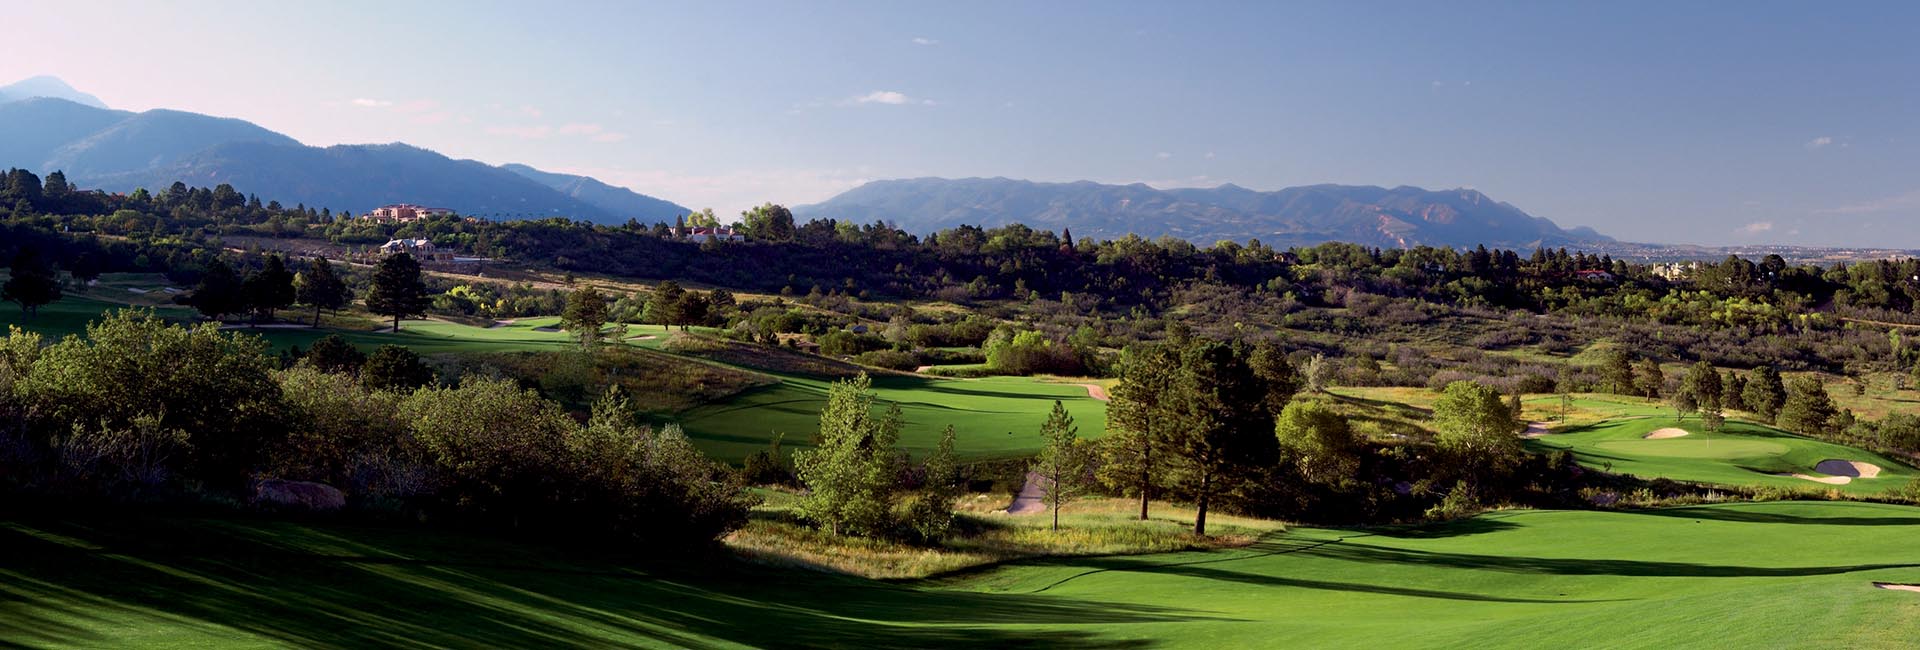 Broadmoor Golf Club—Mountain Course Nicklaus Design